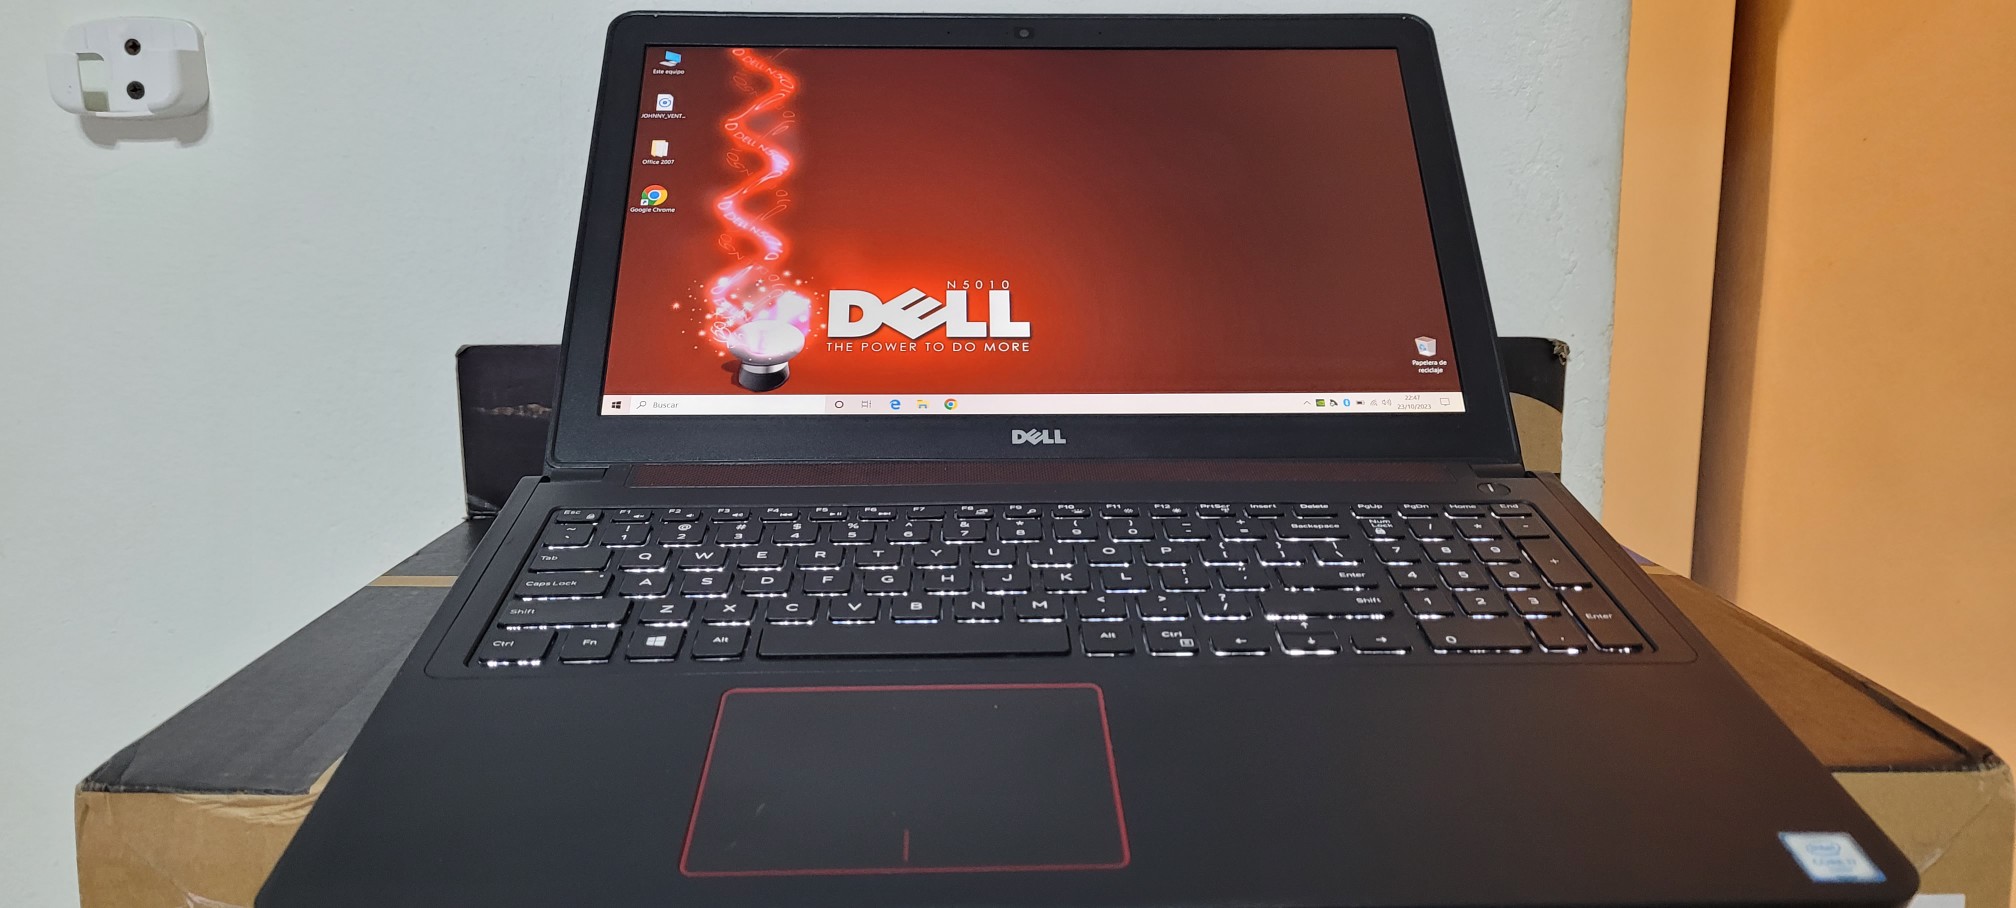 computadoras y laptops - Laptop Dell gamer 17 Pulg intel Core i7 Ram 16gb Nvidea Gtx 960m 4gb Dedicada